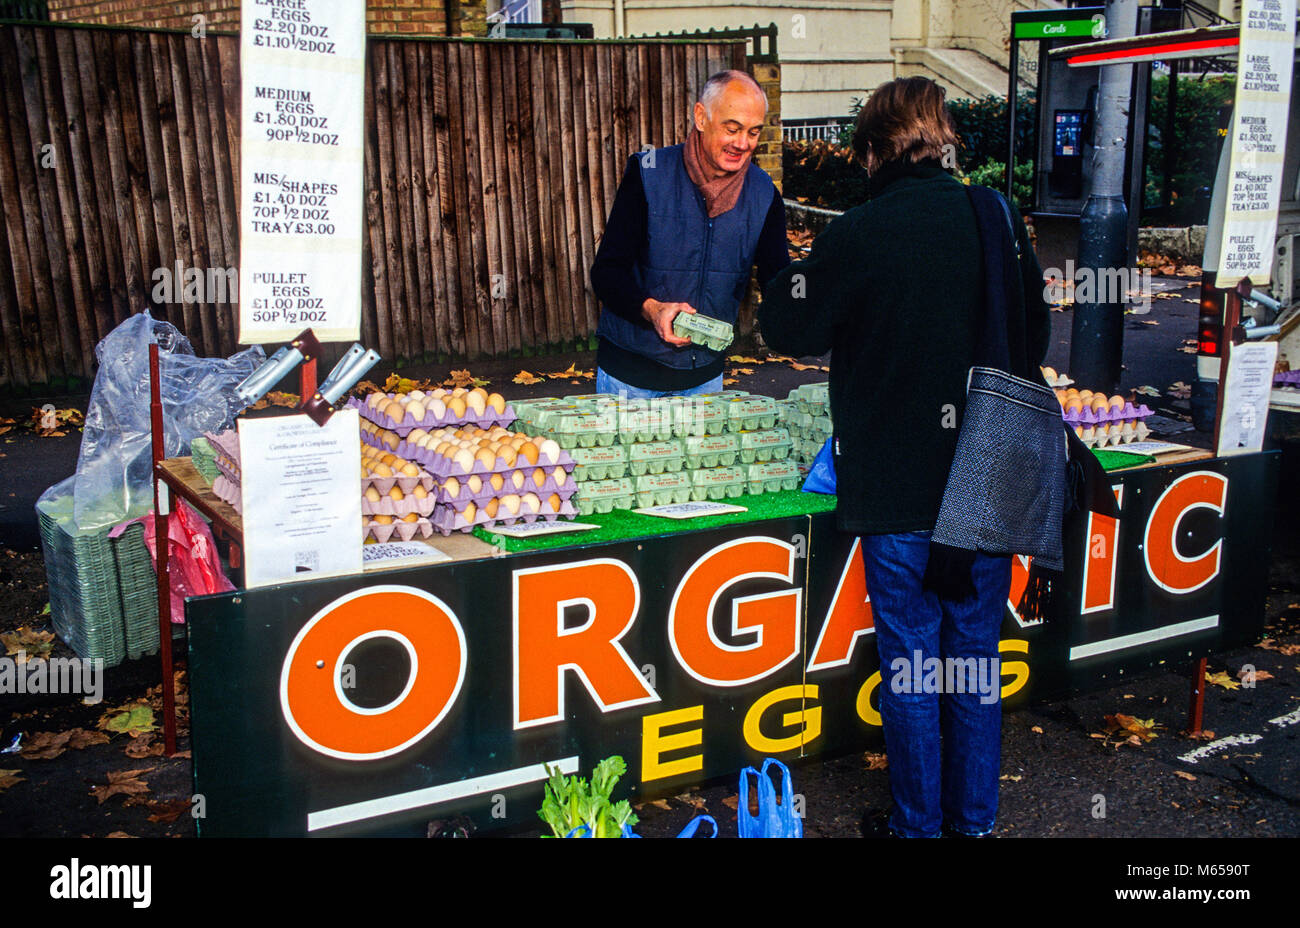 Organic Egg Seller, Farmers Market, London, England. Stock Photo